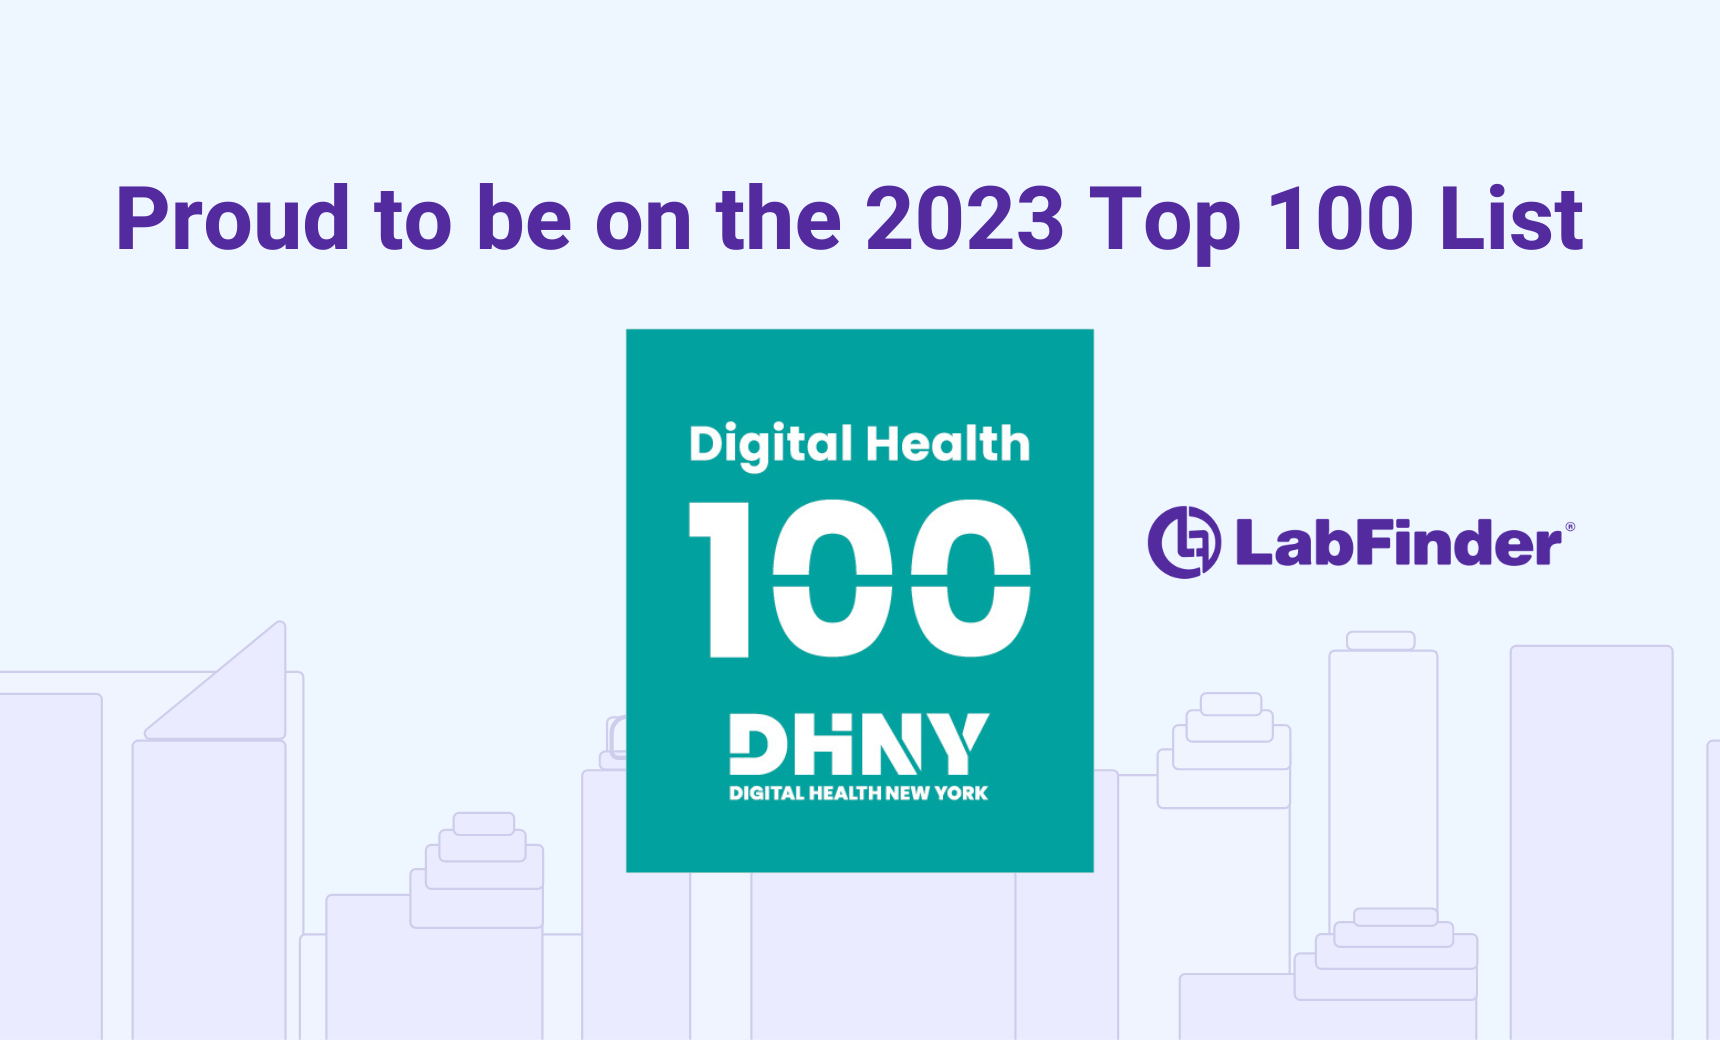 LabFinder Named Among Top 100 Digital Health Innovators in New York Region